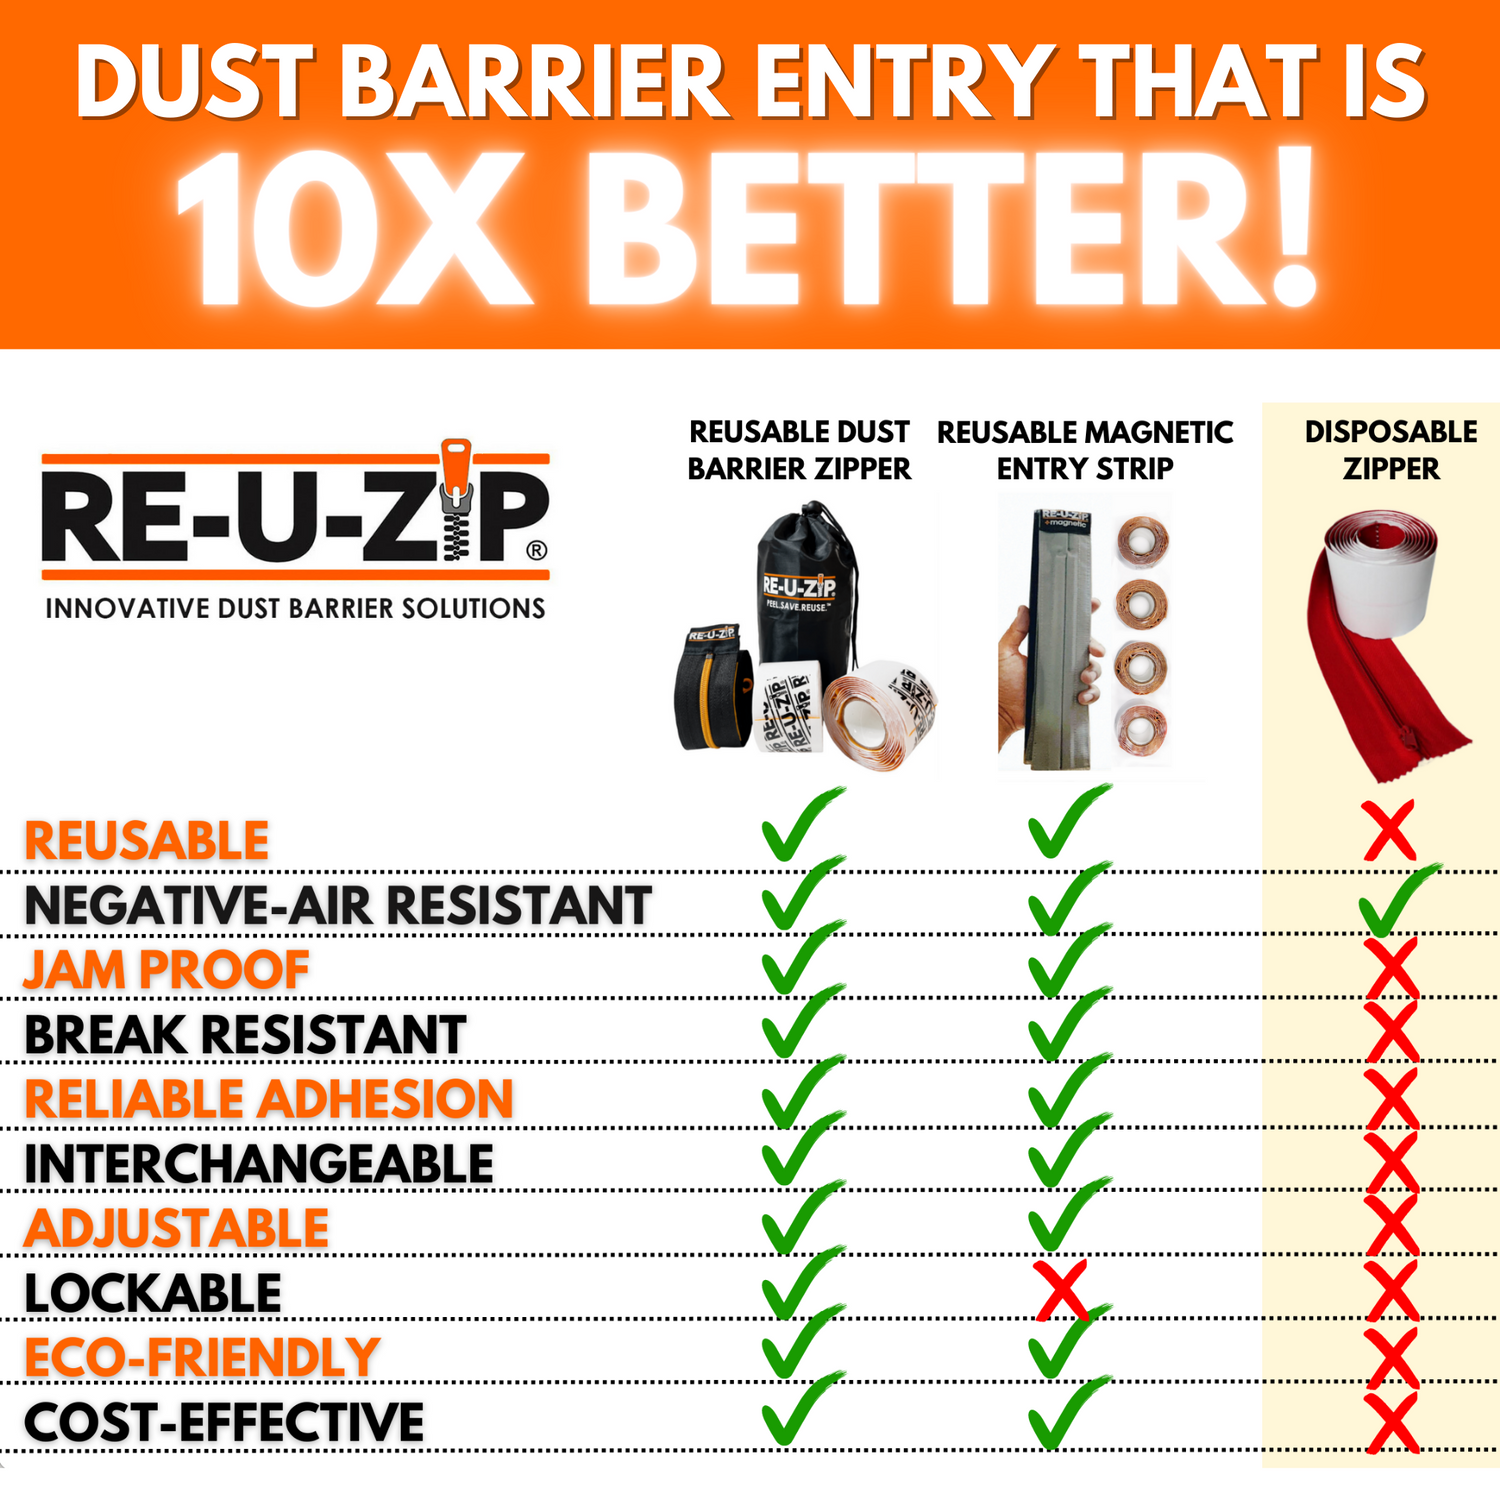 RE-U-Zip Dust Containment Barrier Solutions vs. Disposable